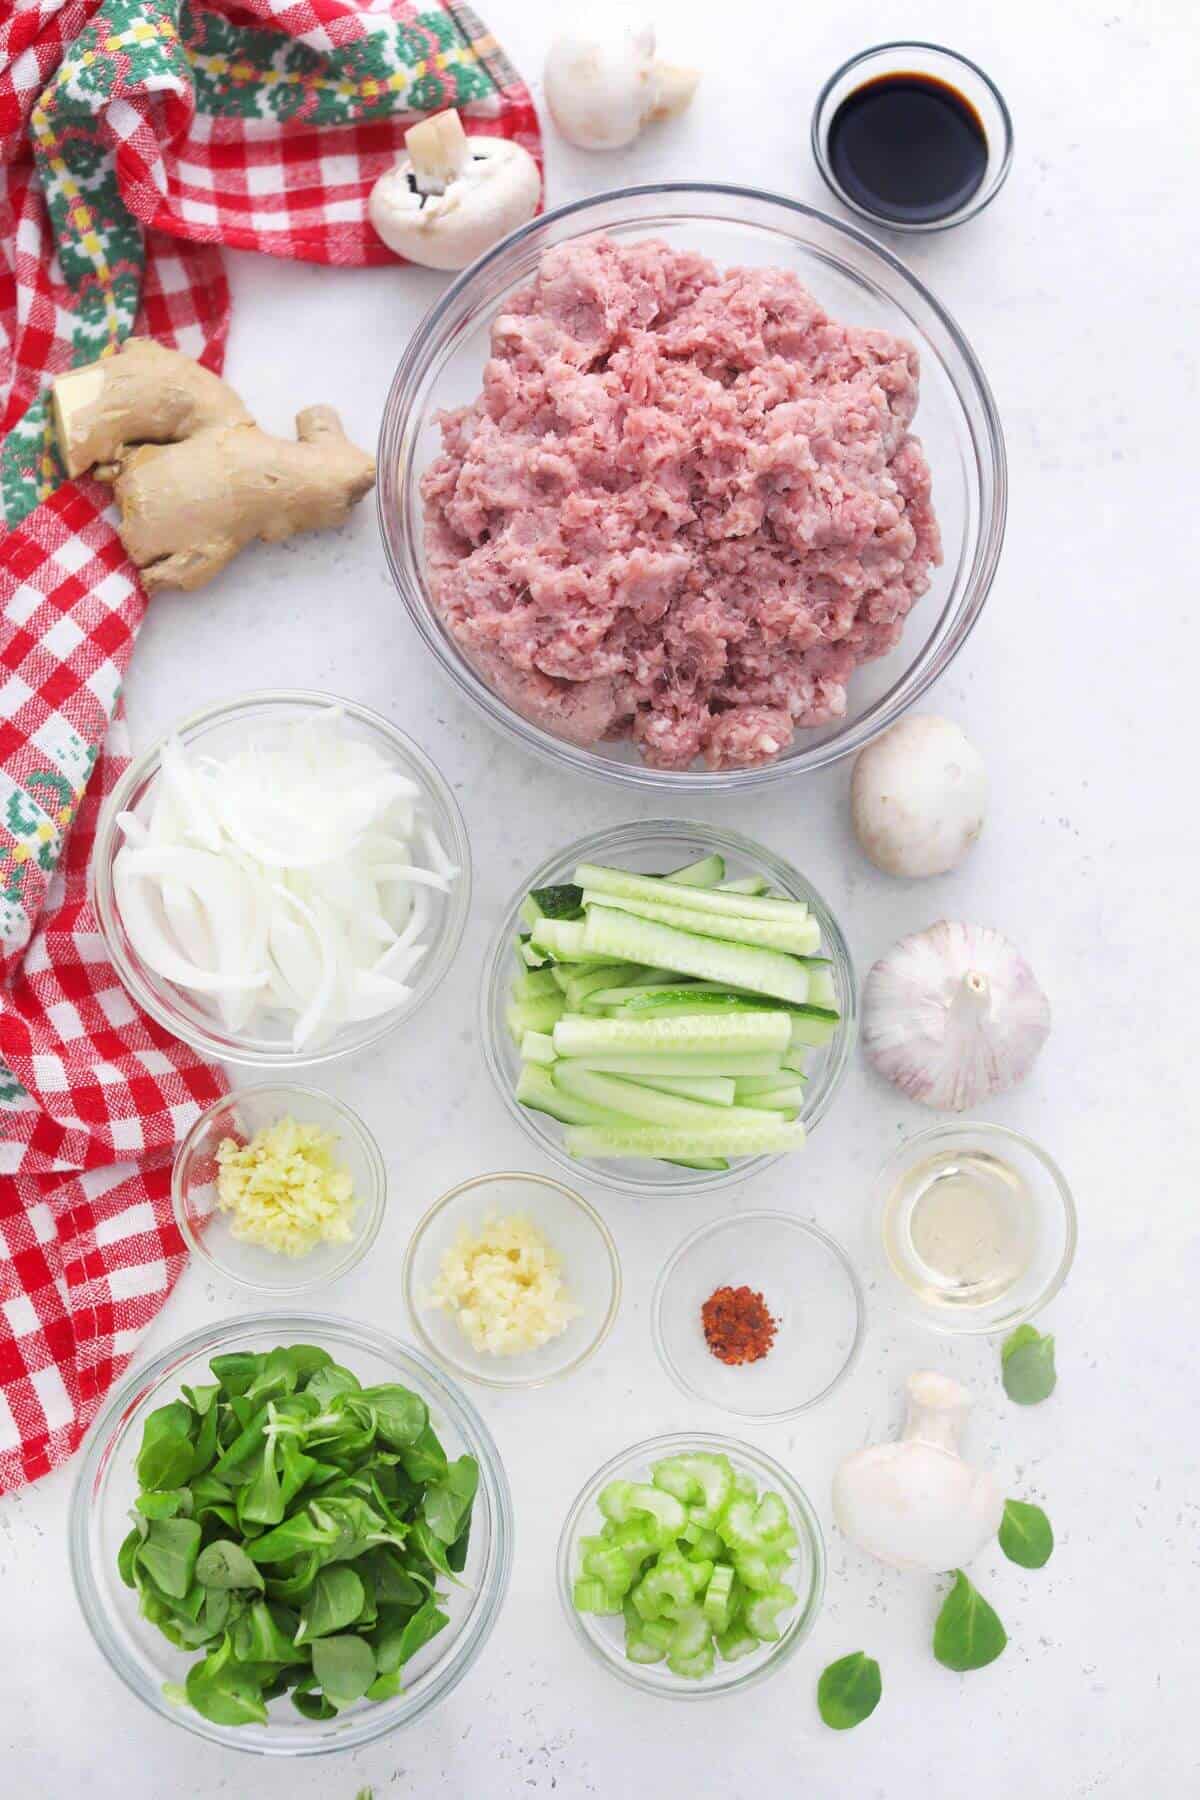 Ingredients for ground pork stir fry on a white background.